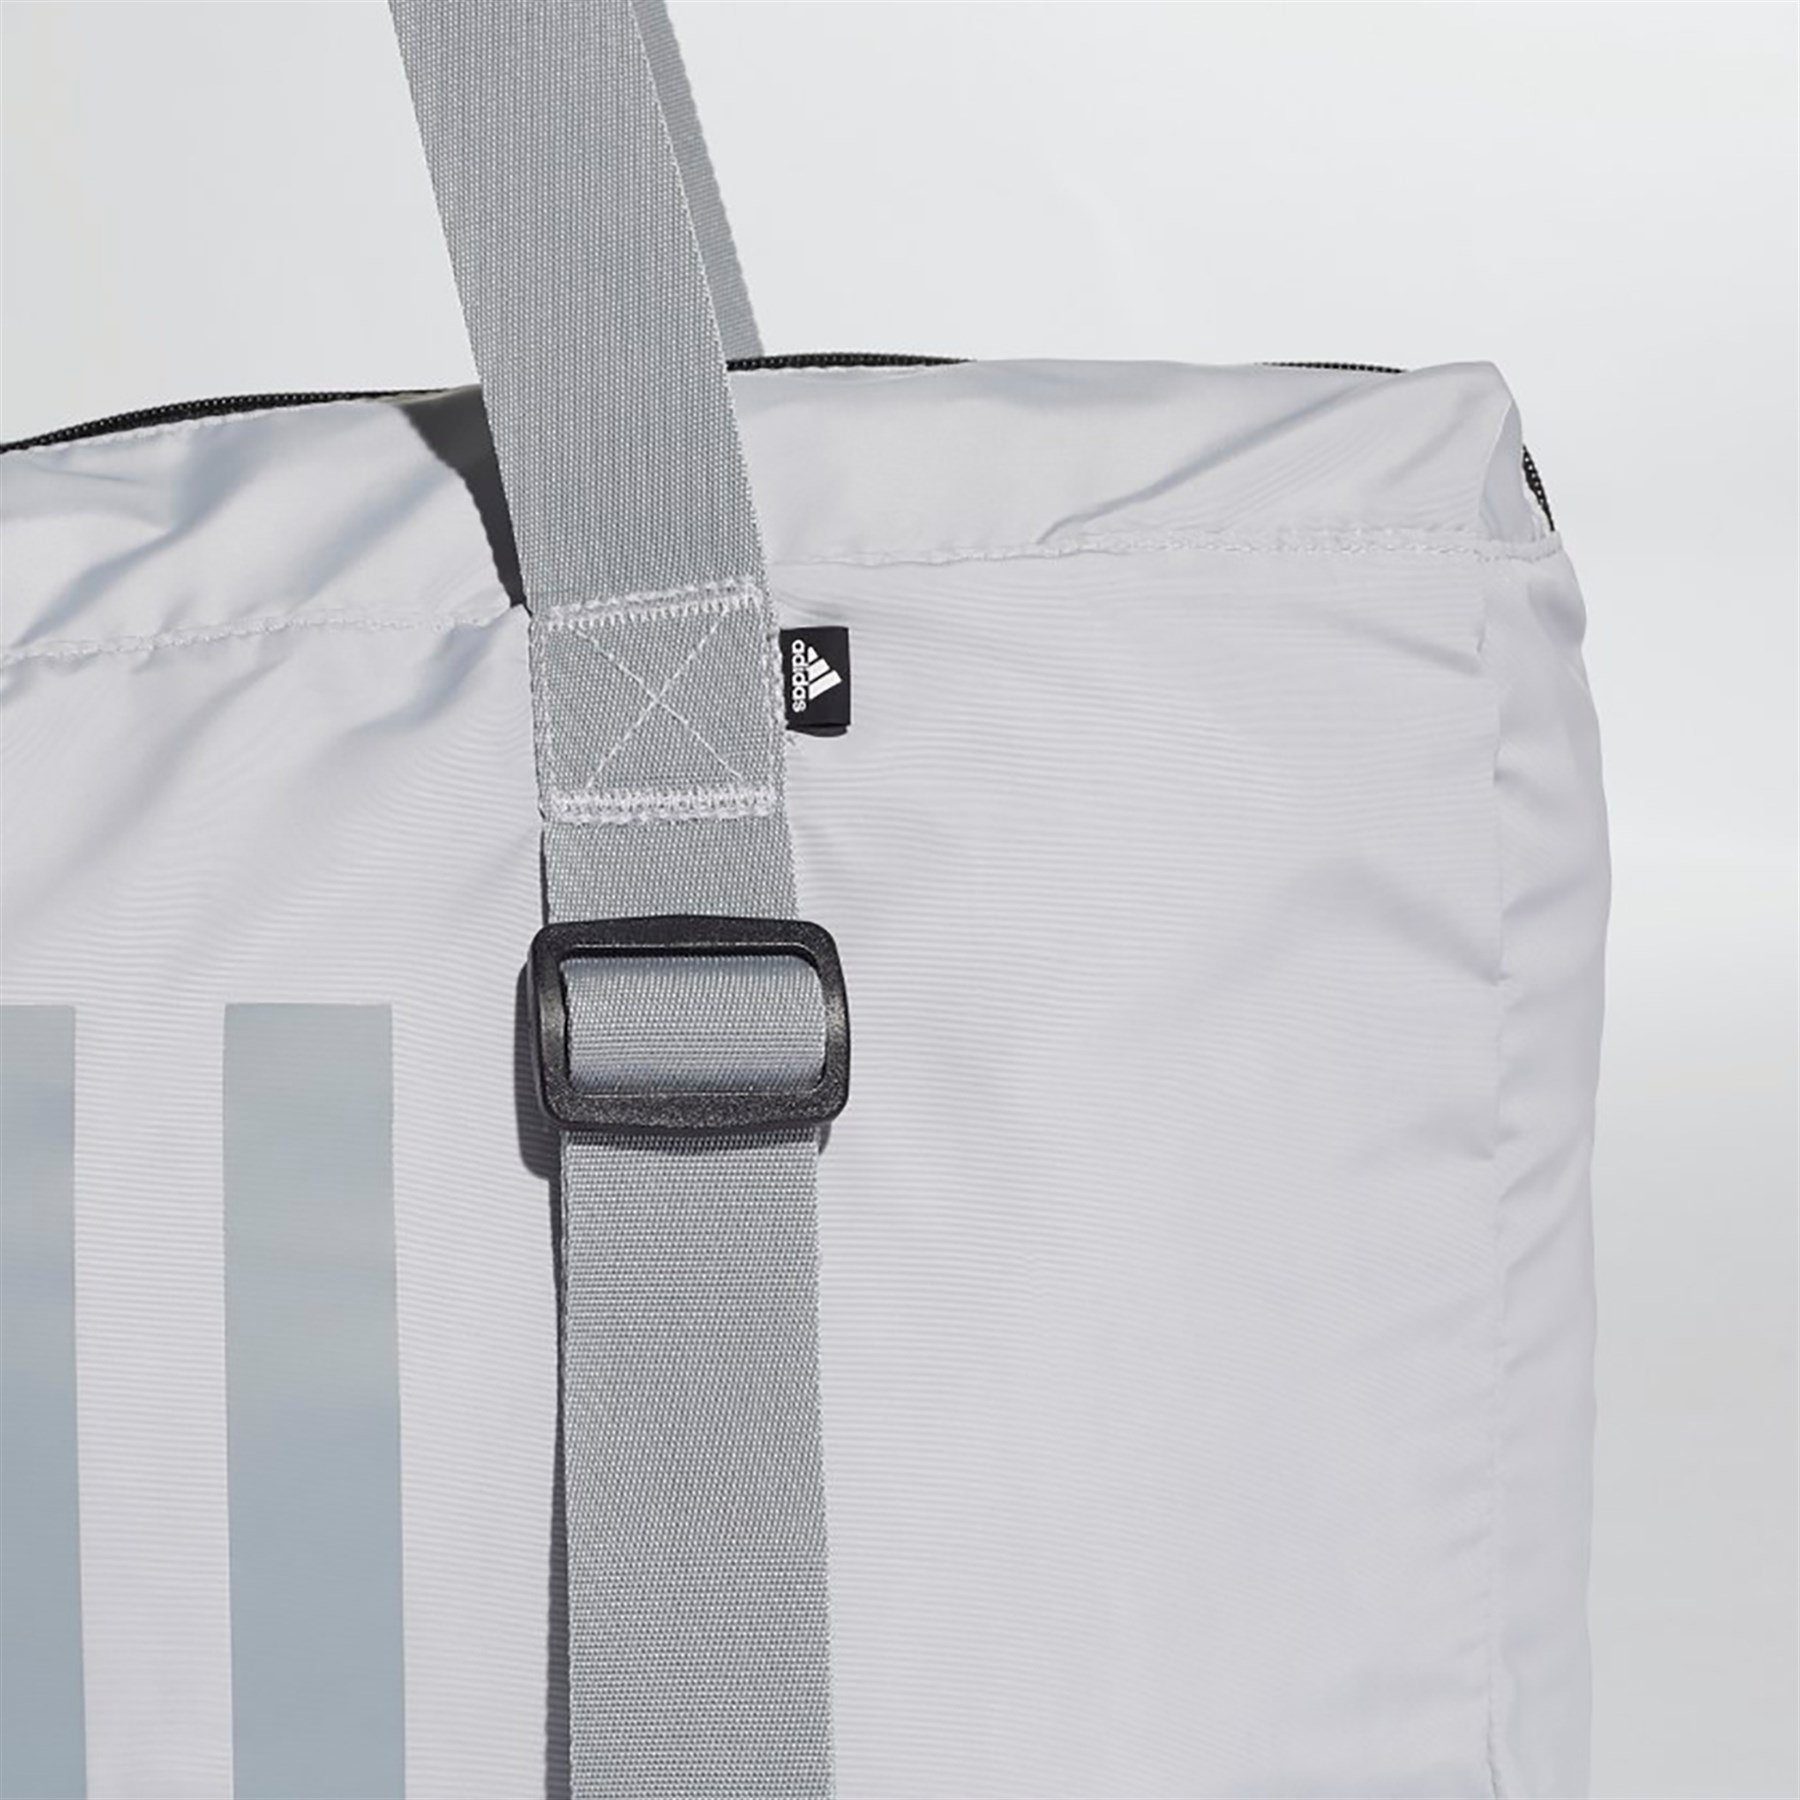 Carry adidas Adidas Originals Bag vom T4H Sporttasche